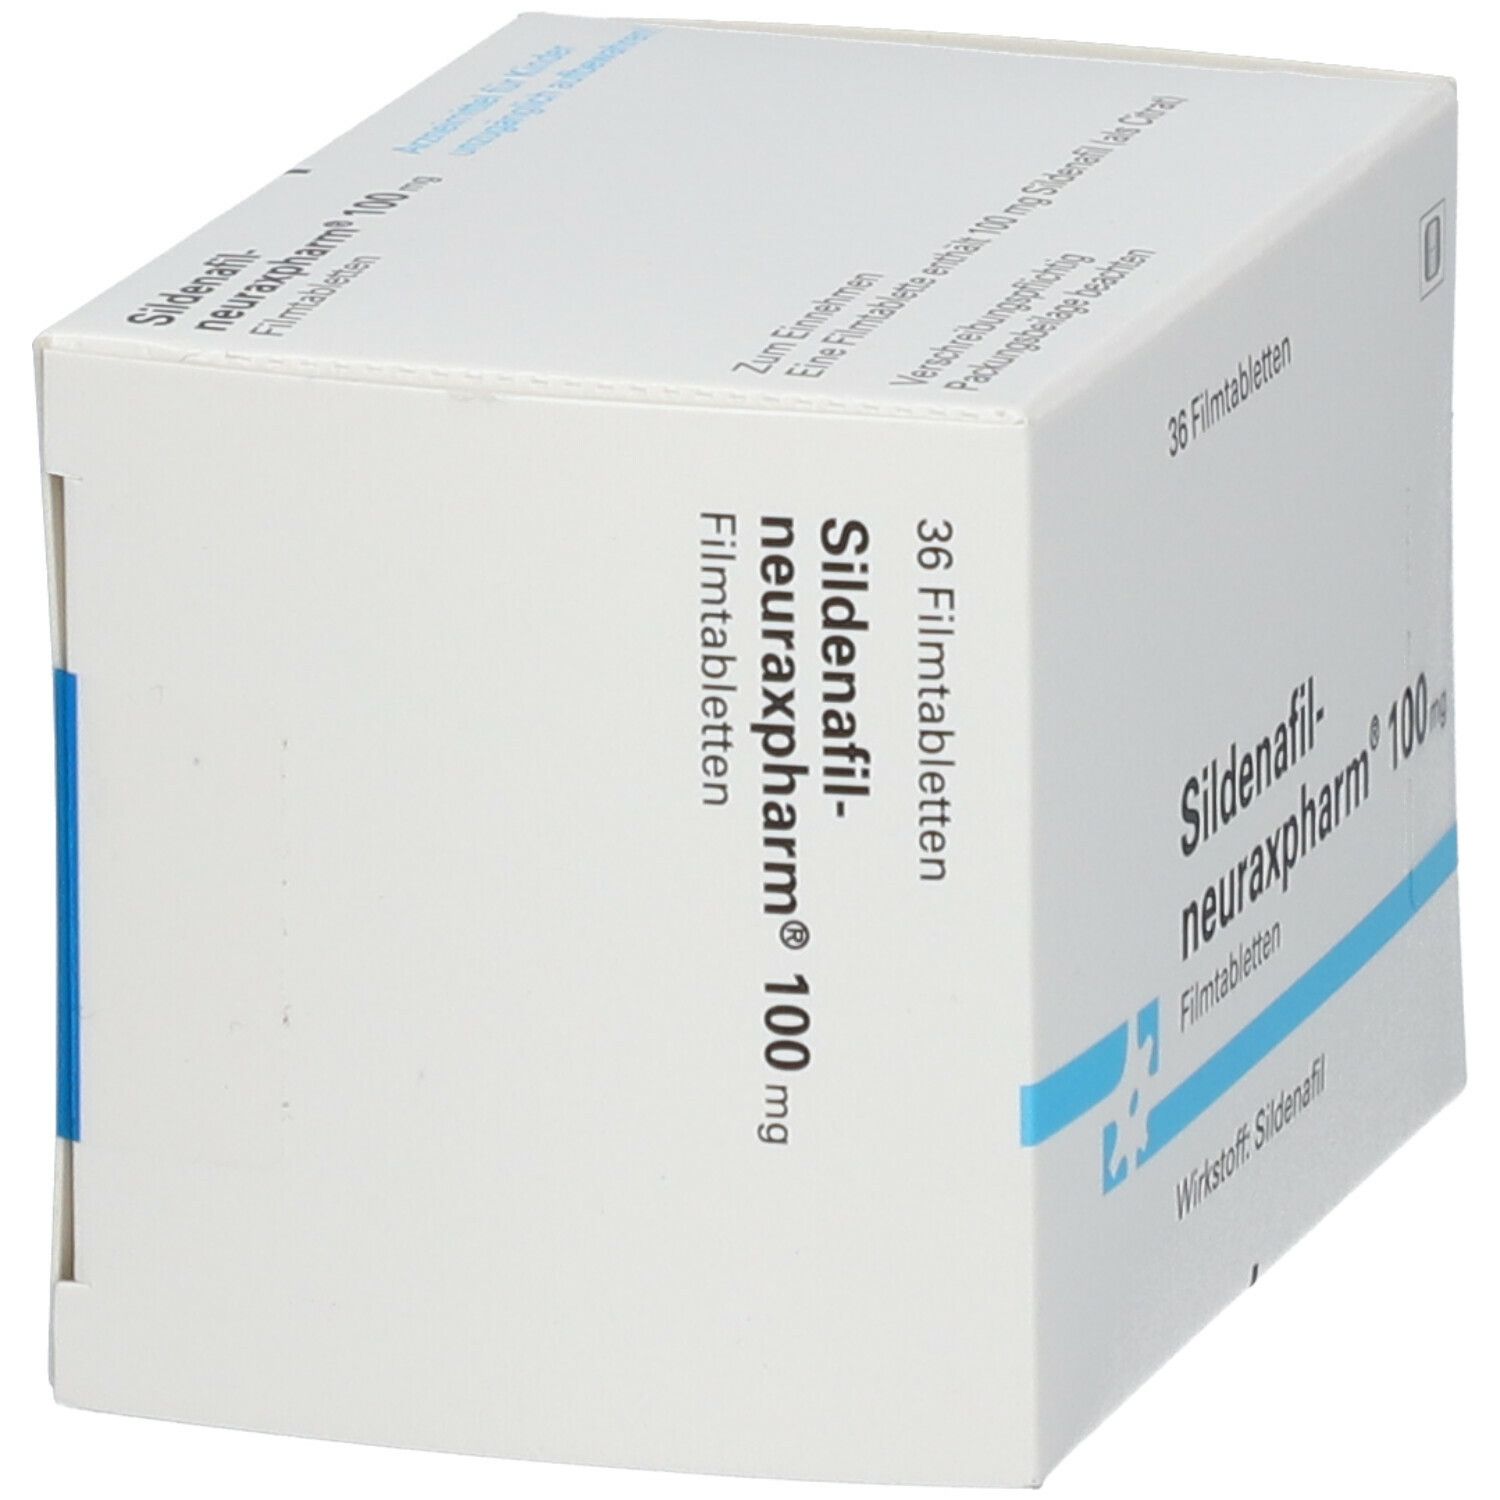 Sildenafil-neuraxpharm® 100 mg